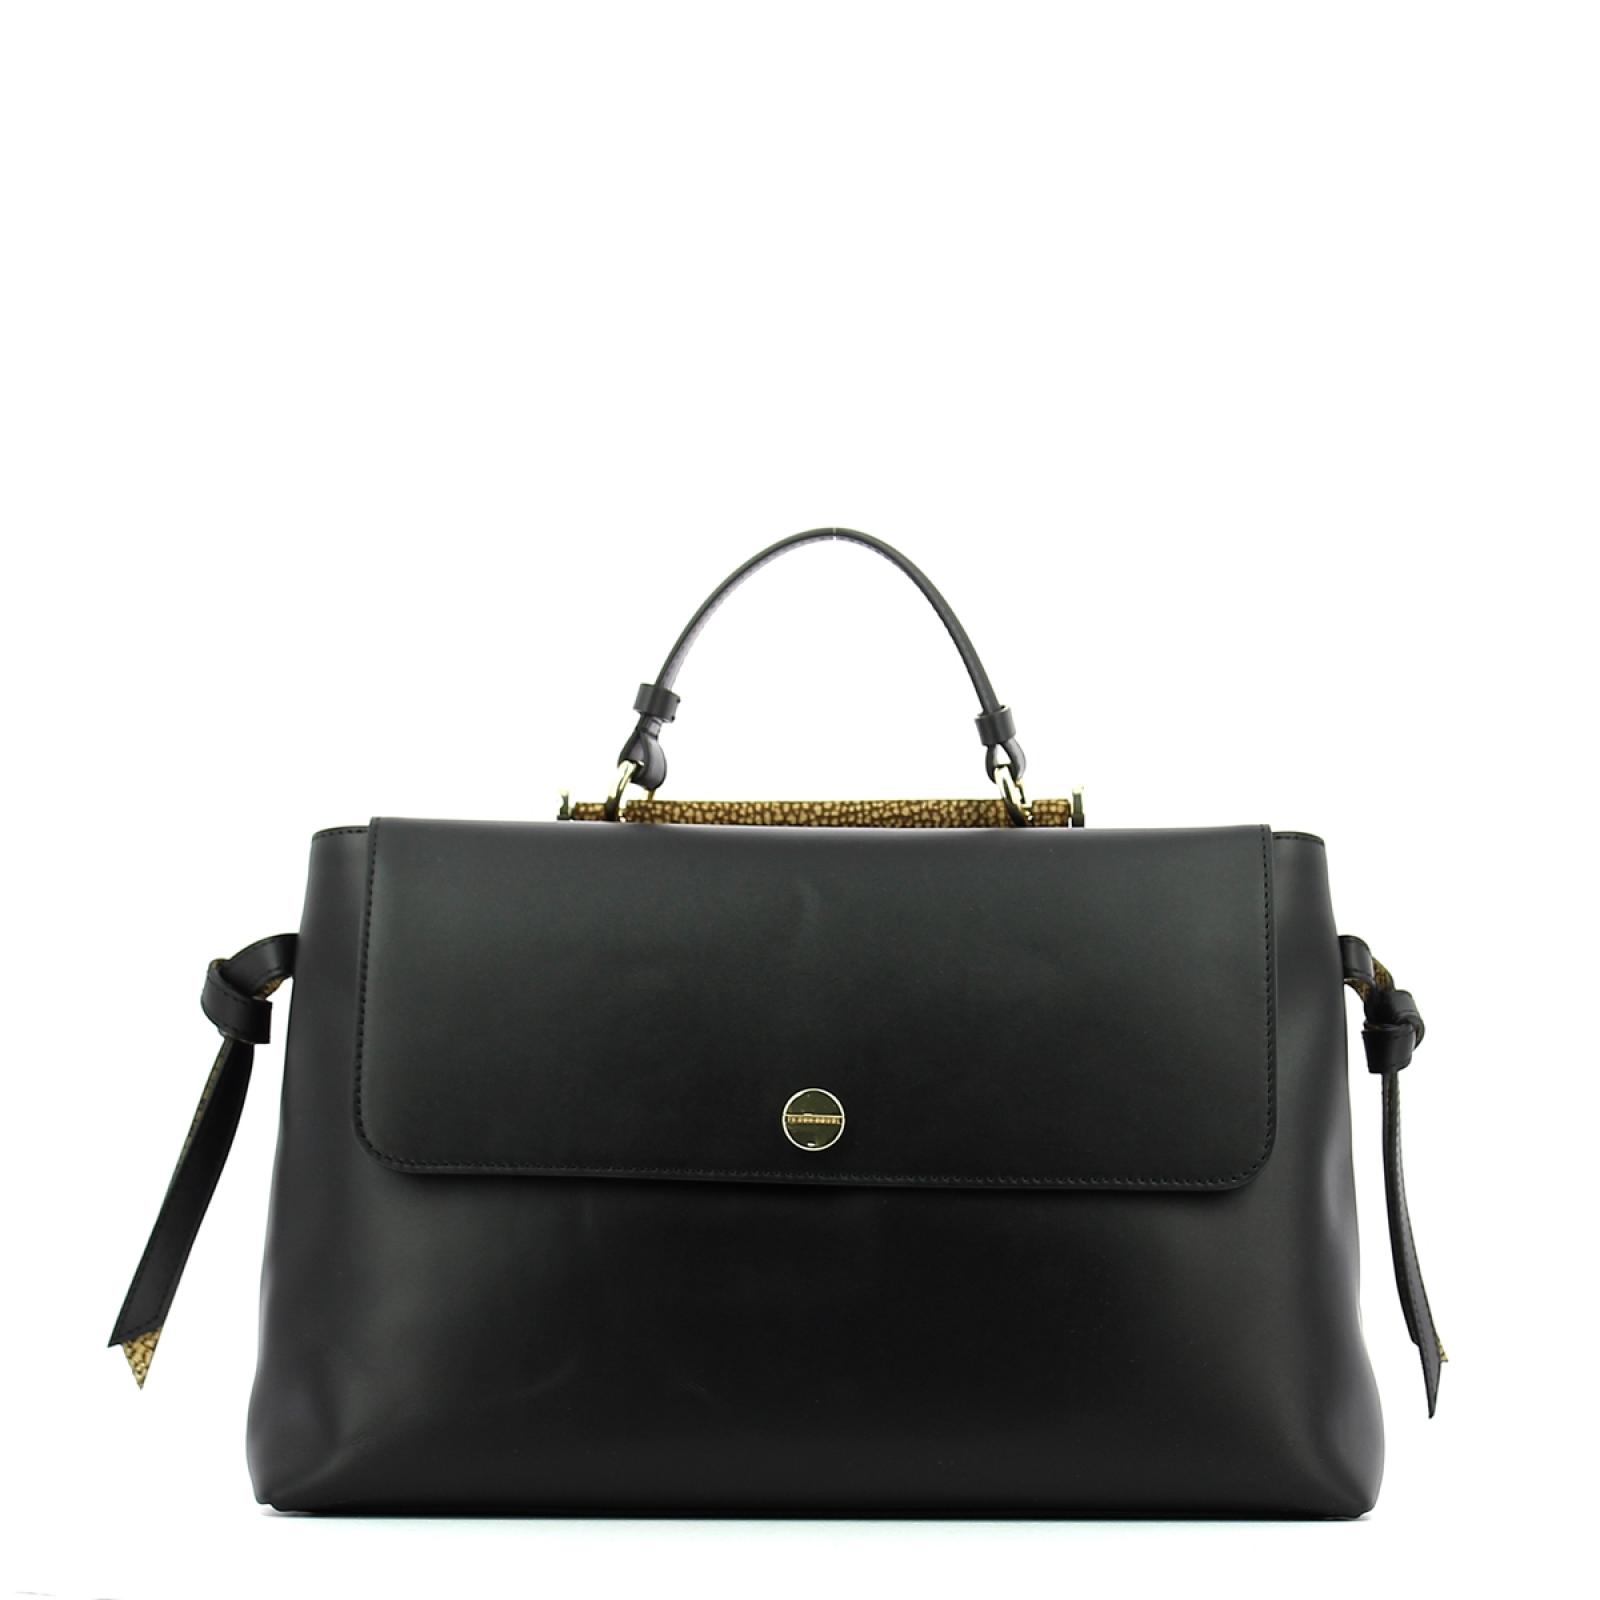 Leather handbag L